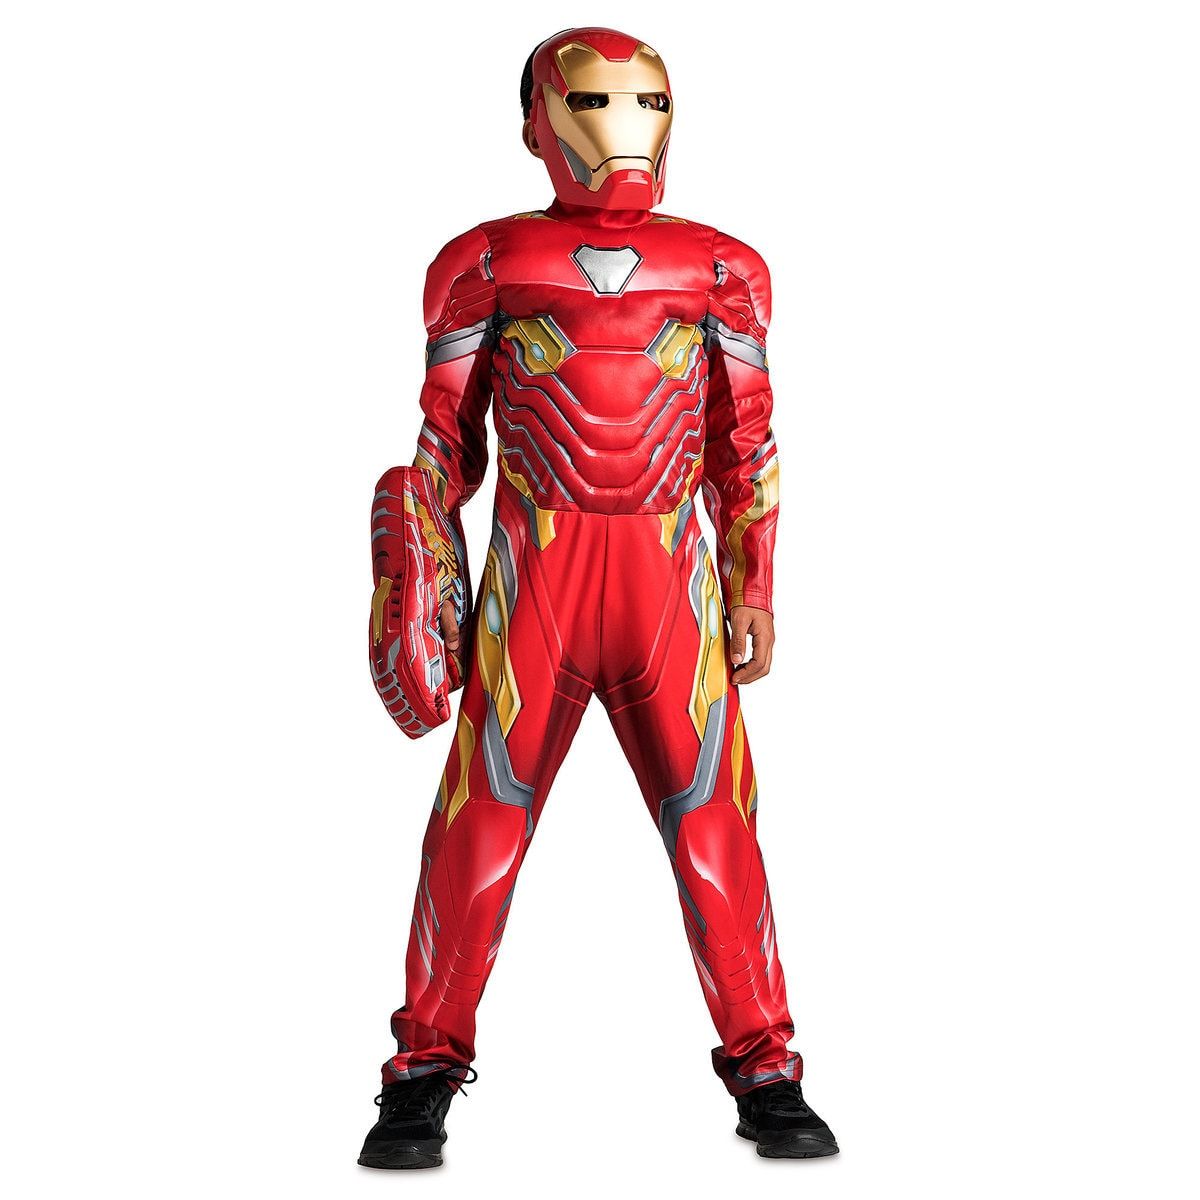 Карнавальный костюм Железный человек с мускулатурой, Iron Man